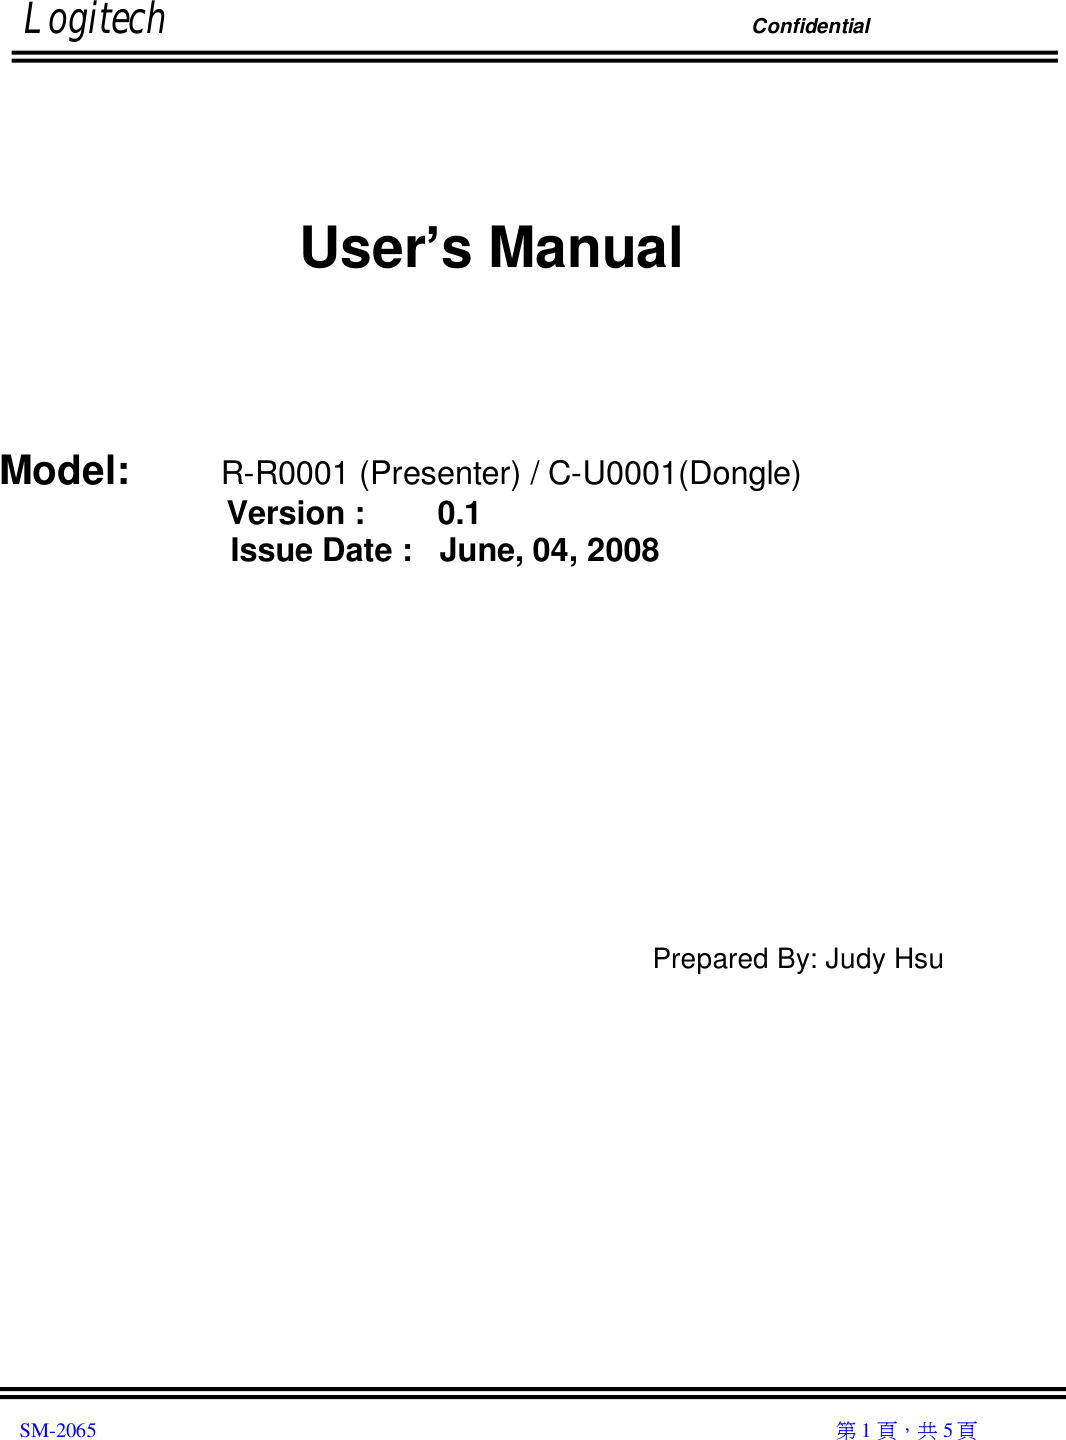         Logitech                                                                Confidential                                                                                                                                                                              SM-2065                                                                                                                                                  第 1 頁，共 5 頁                       User’s Manual     Model:        R-R0001 (Presenter) / C-U0001(Dongle) Version :        0.1 Issue Date :   June, 04, 2008          Prepared By: Judy Hsu               